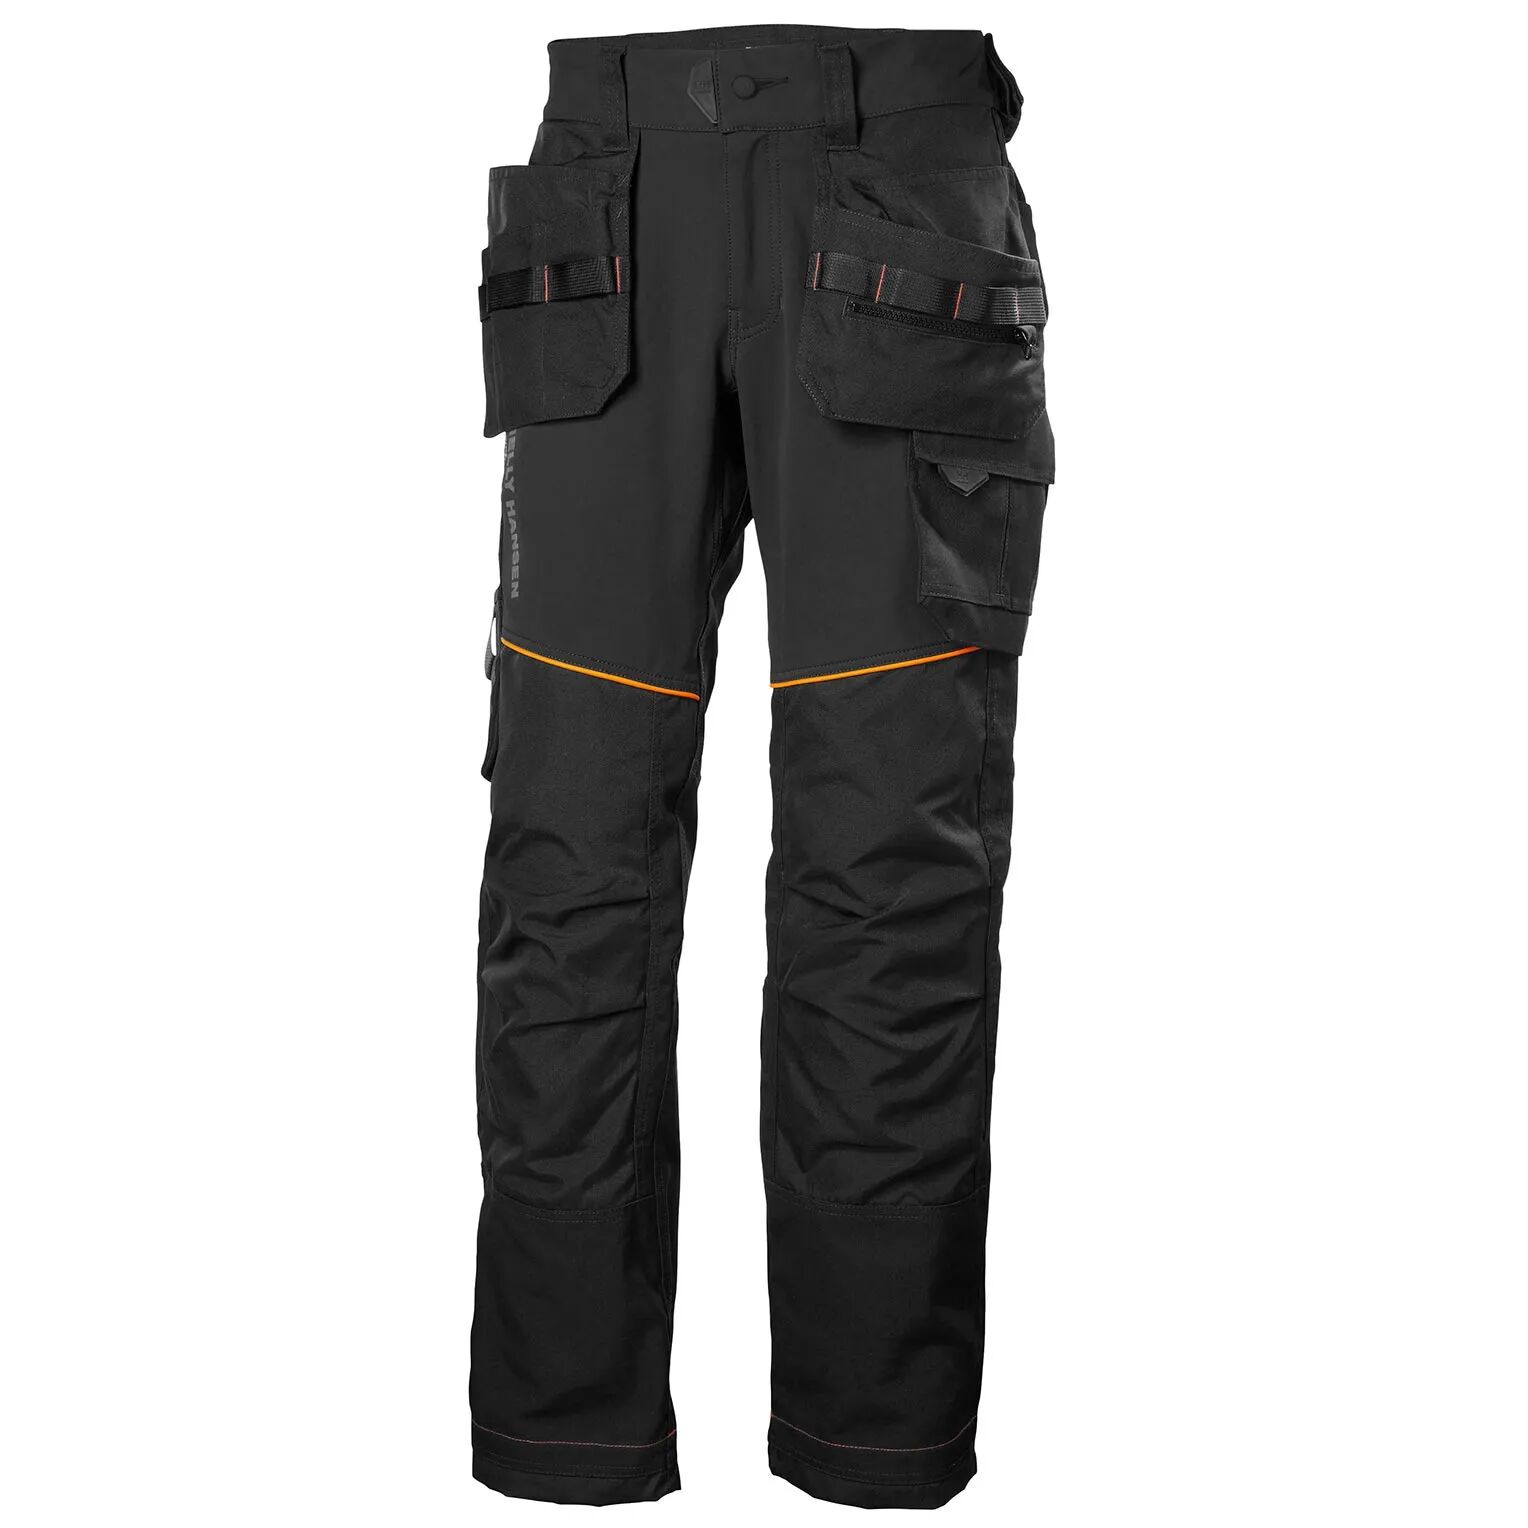 HH Workwear Helly Hansen WorkwearChelsea Evolution Construction Pants Black 32/30